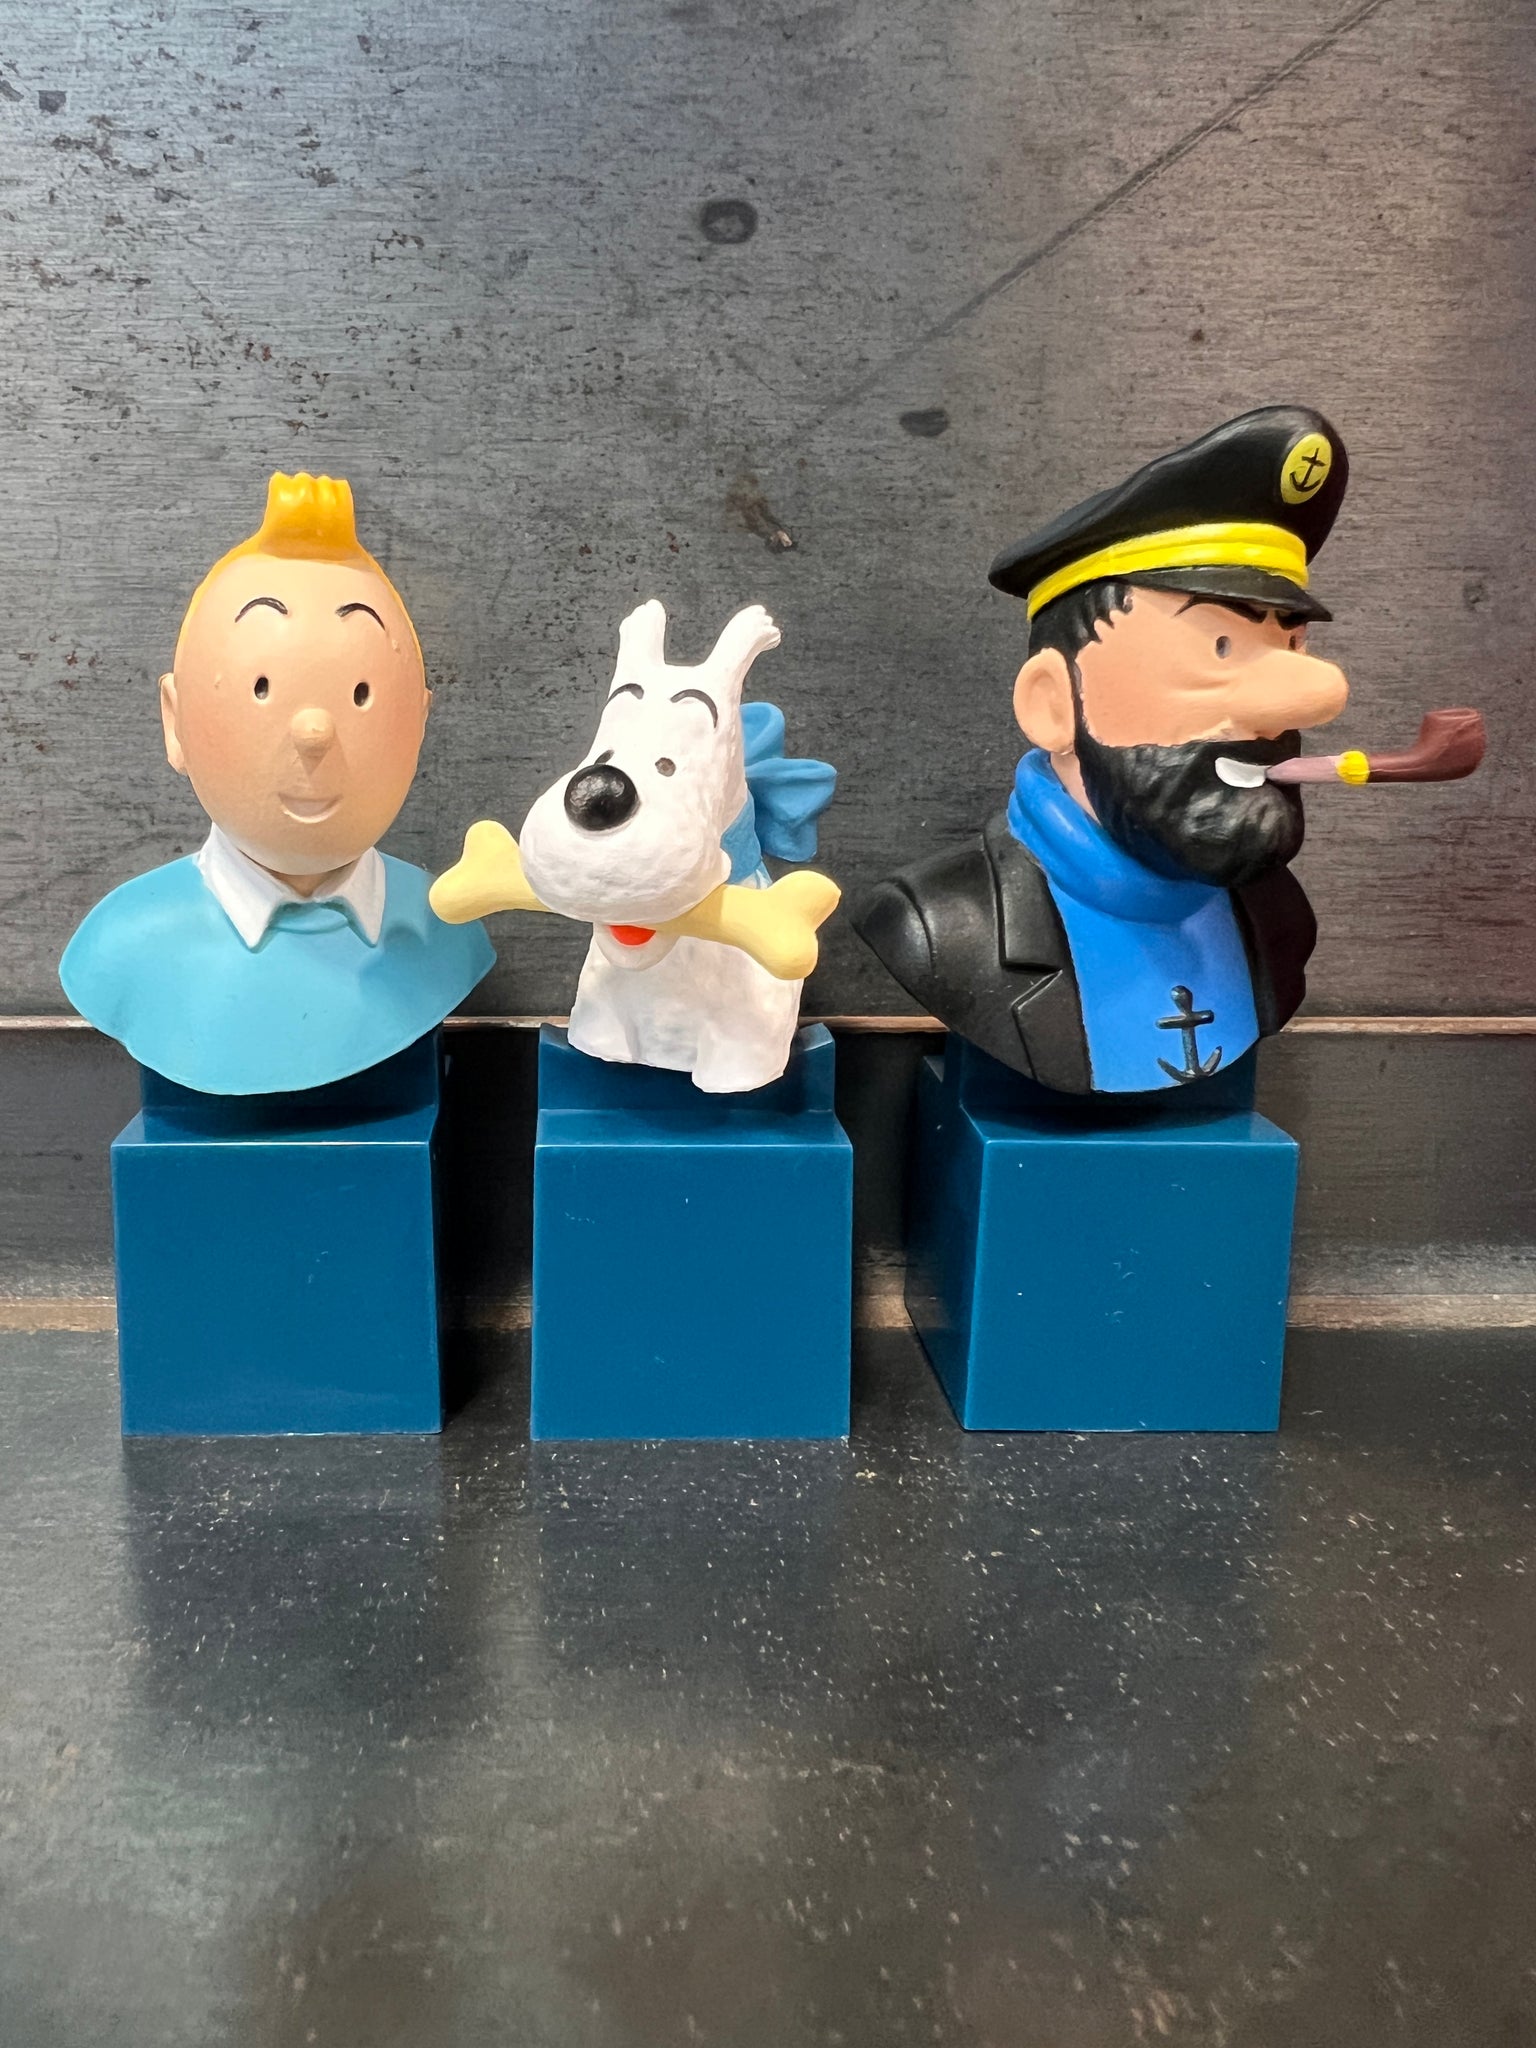 Tintin Resin Figurine Cosmonaute 12 cm. Ref: 42186 – Sausalito Ferry Co